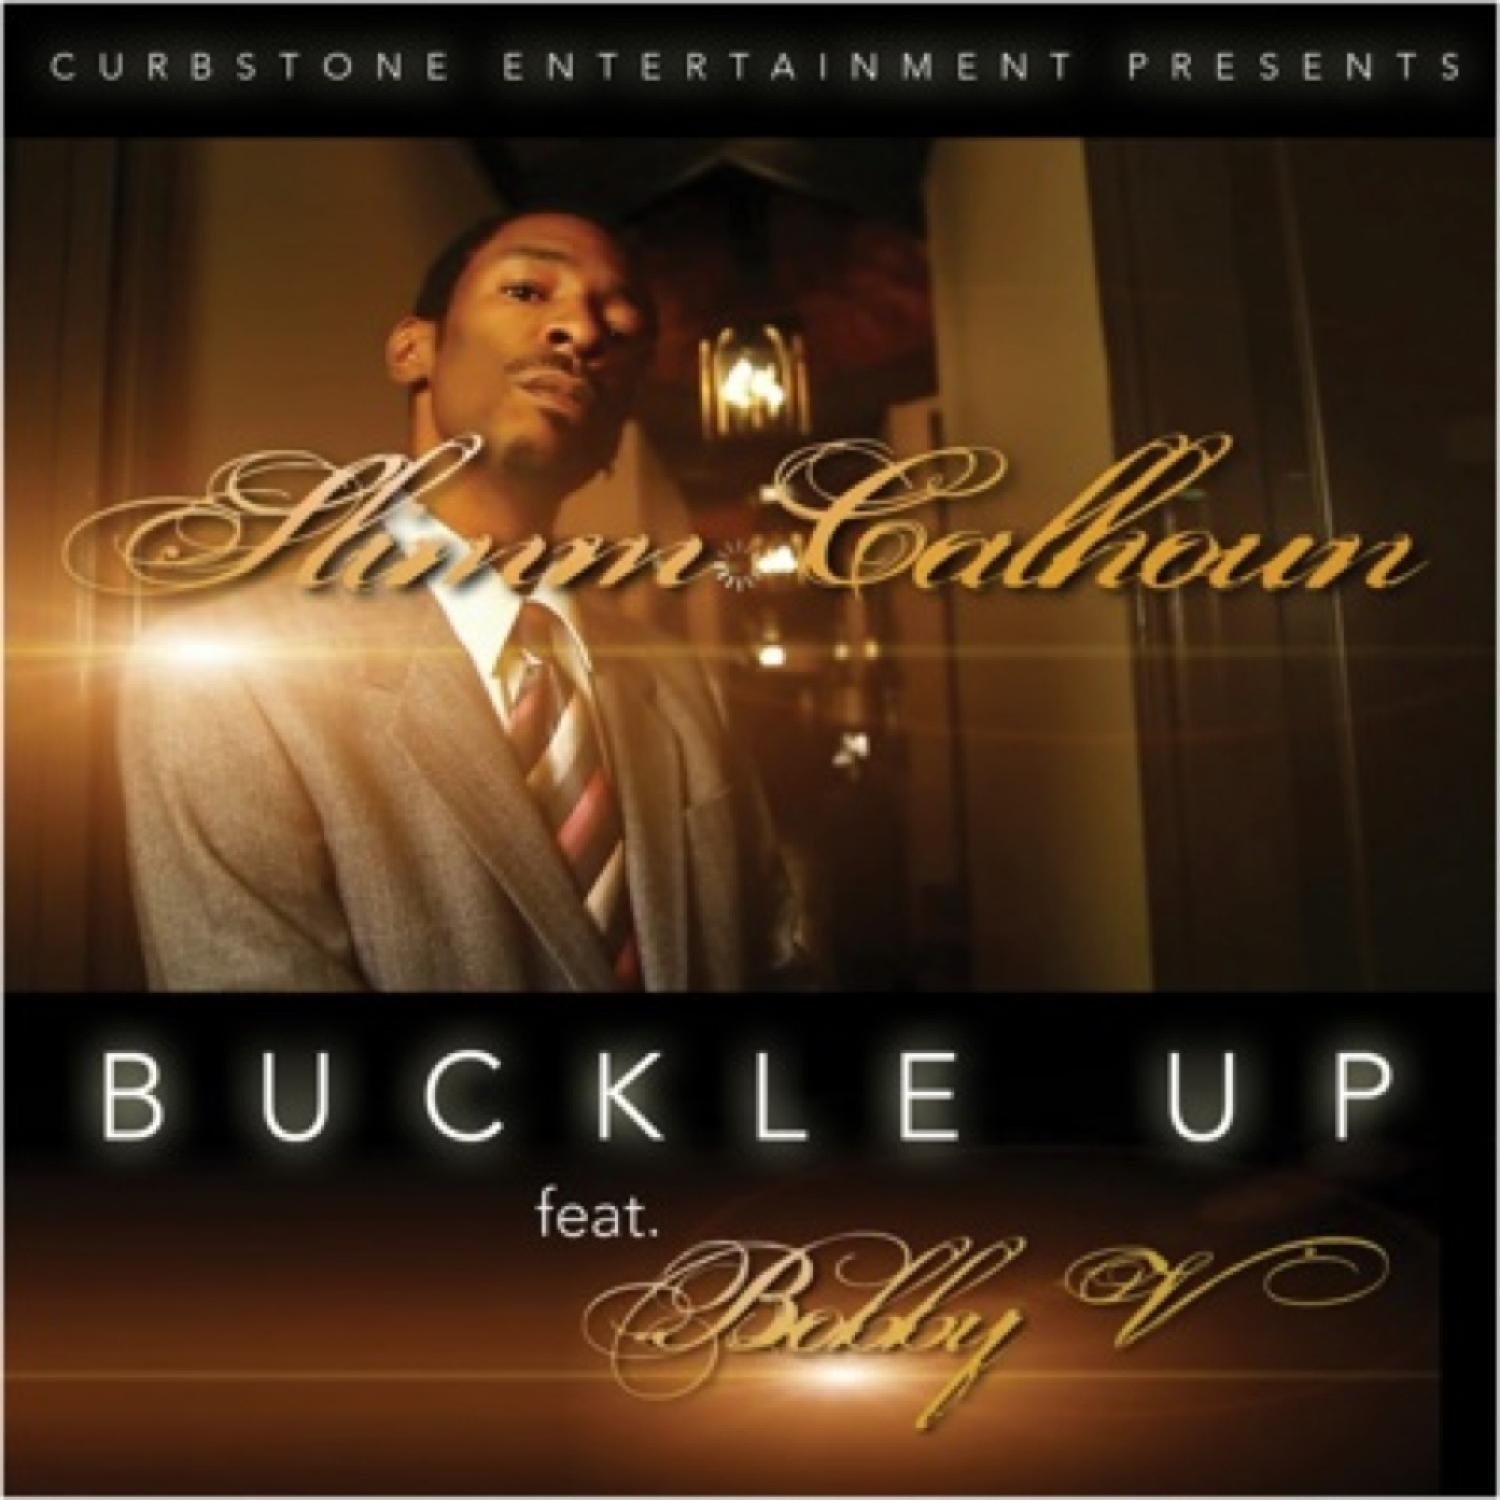 Buckle Up (feat. Bobby V) - Single